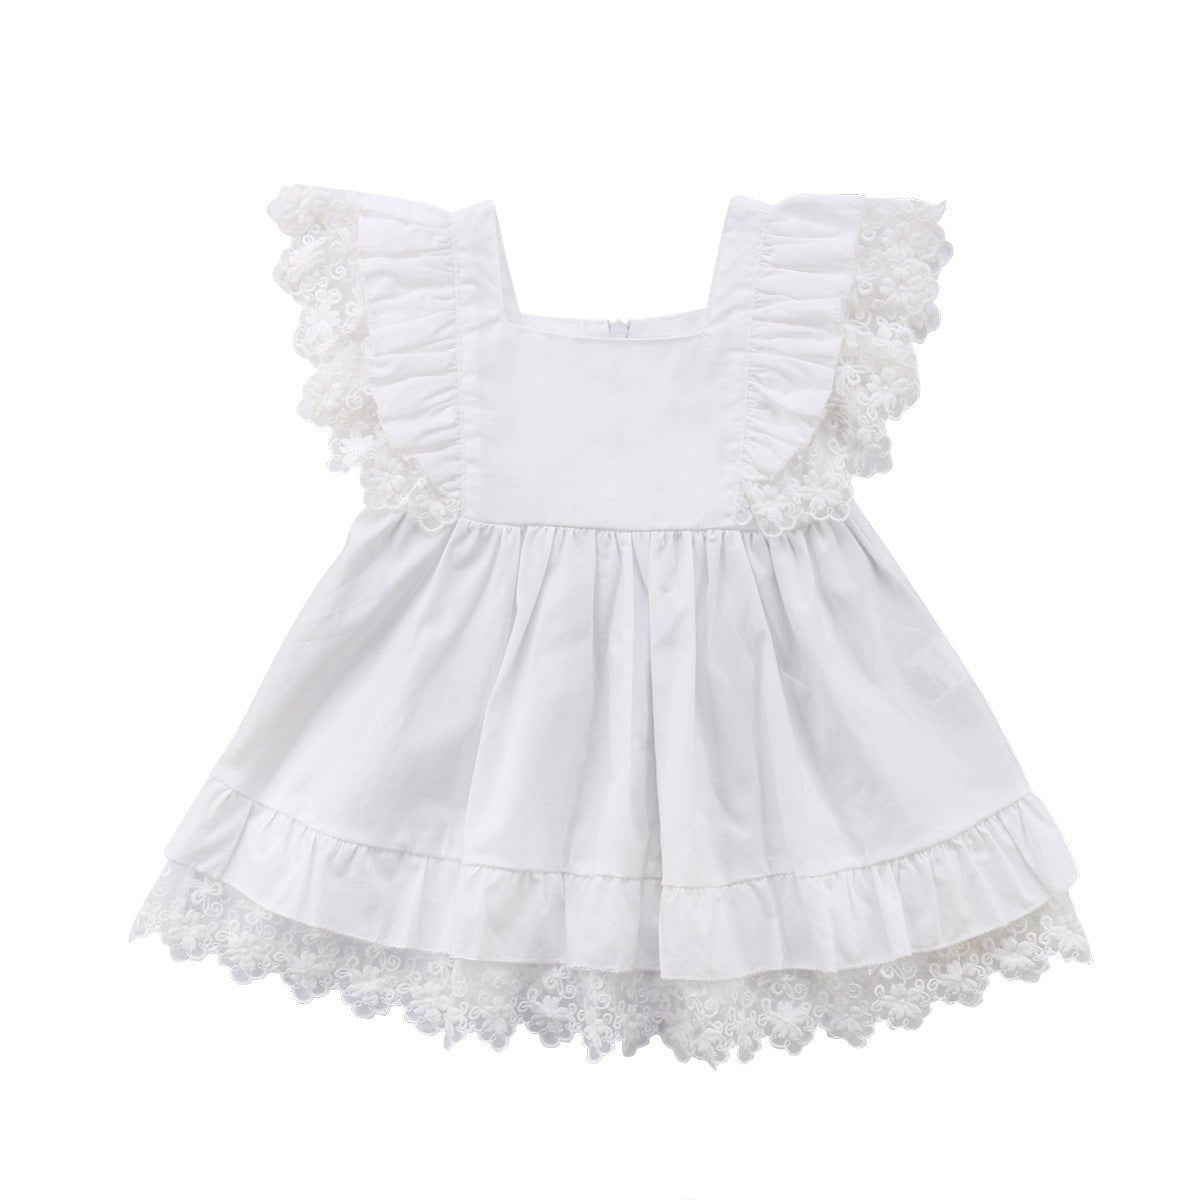 Lace White Mesh Childrens Dress - Dresses -  Trend Goods